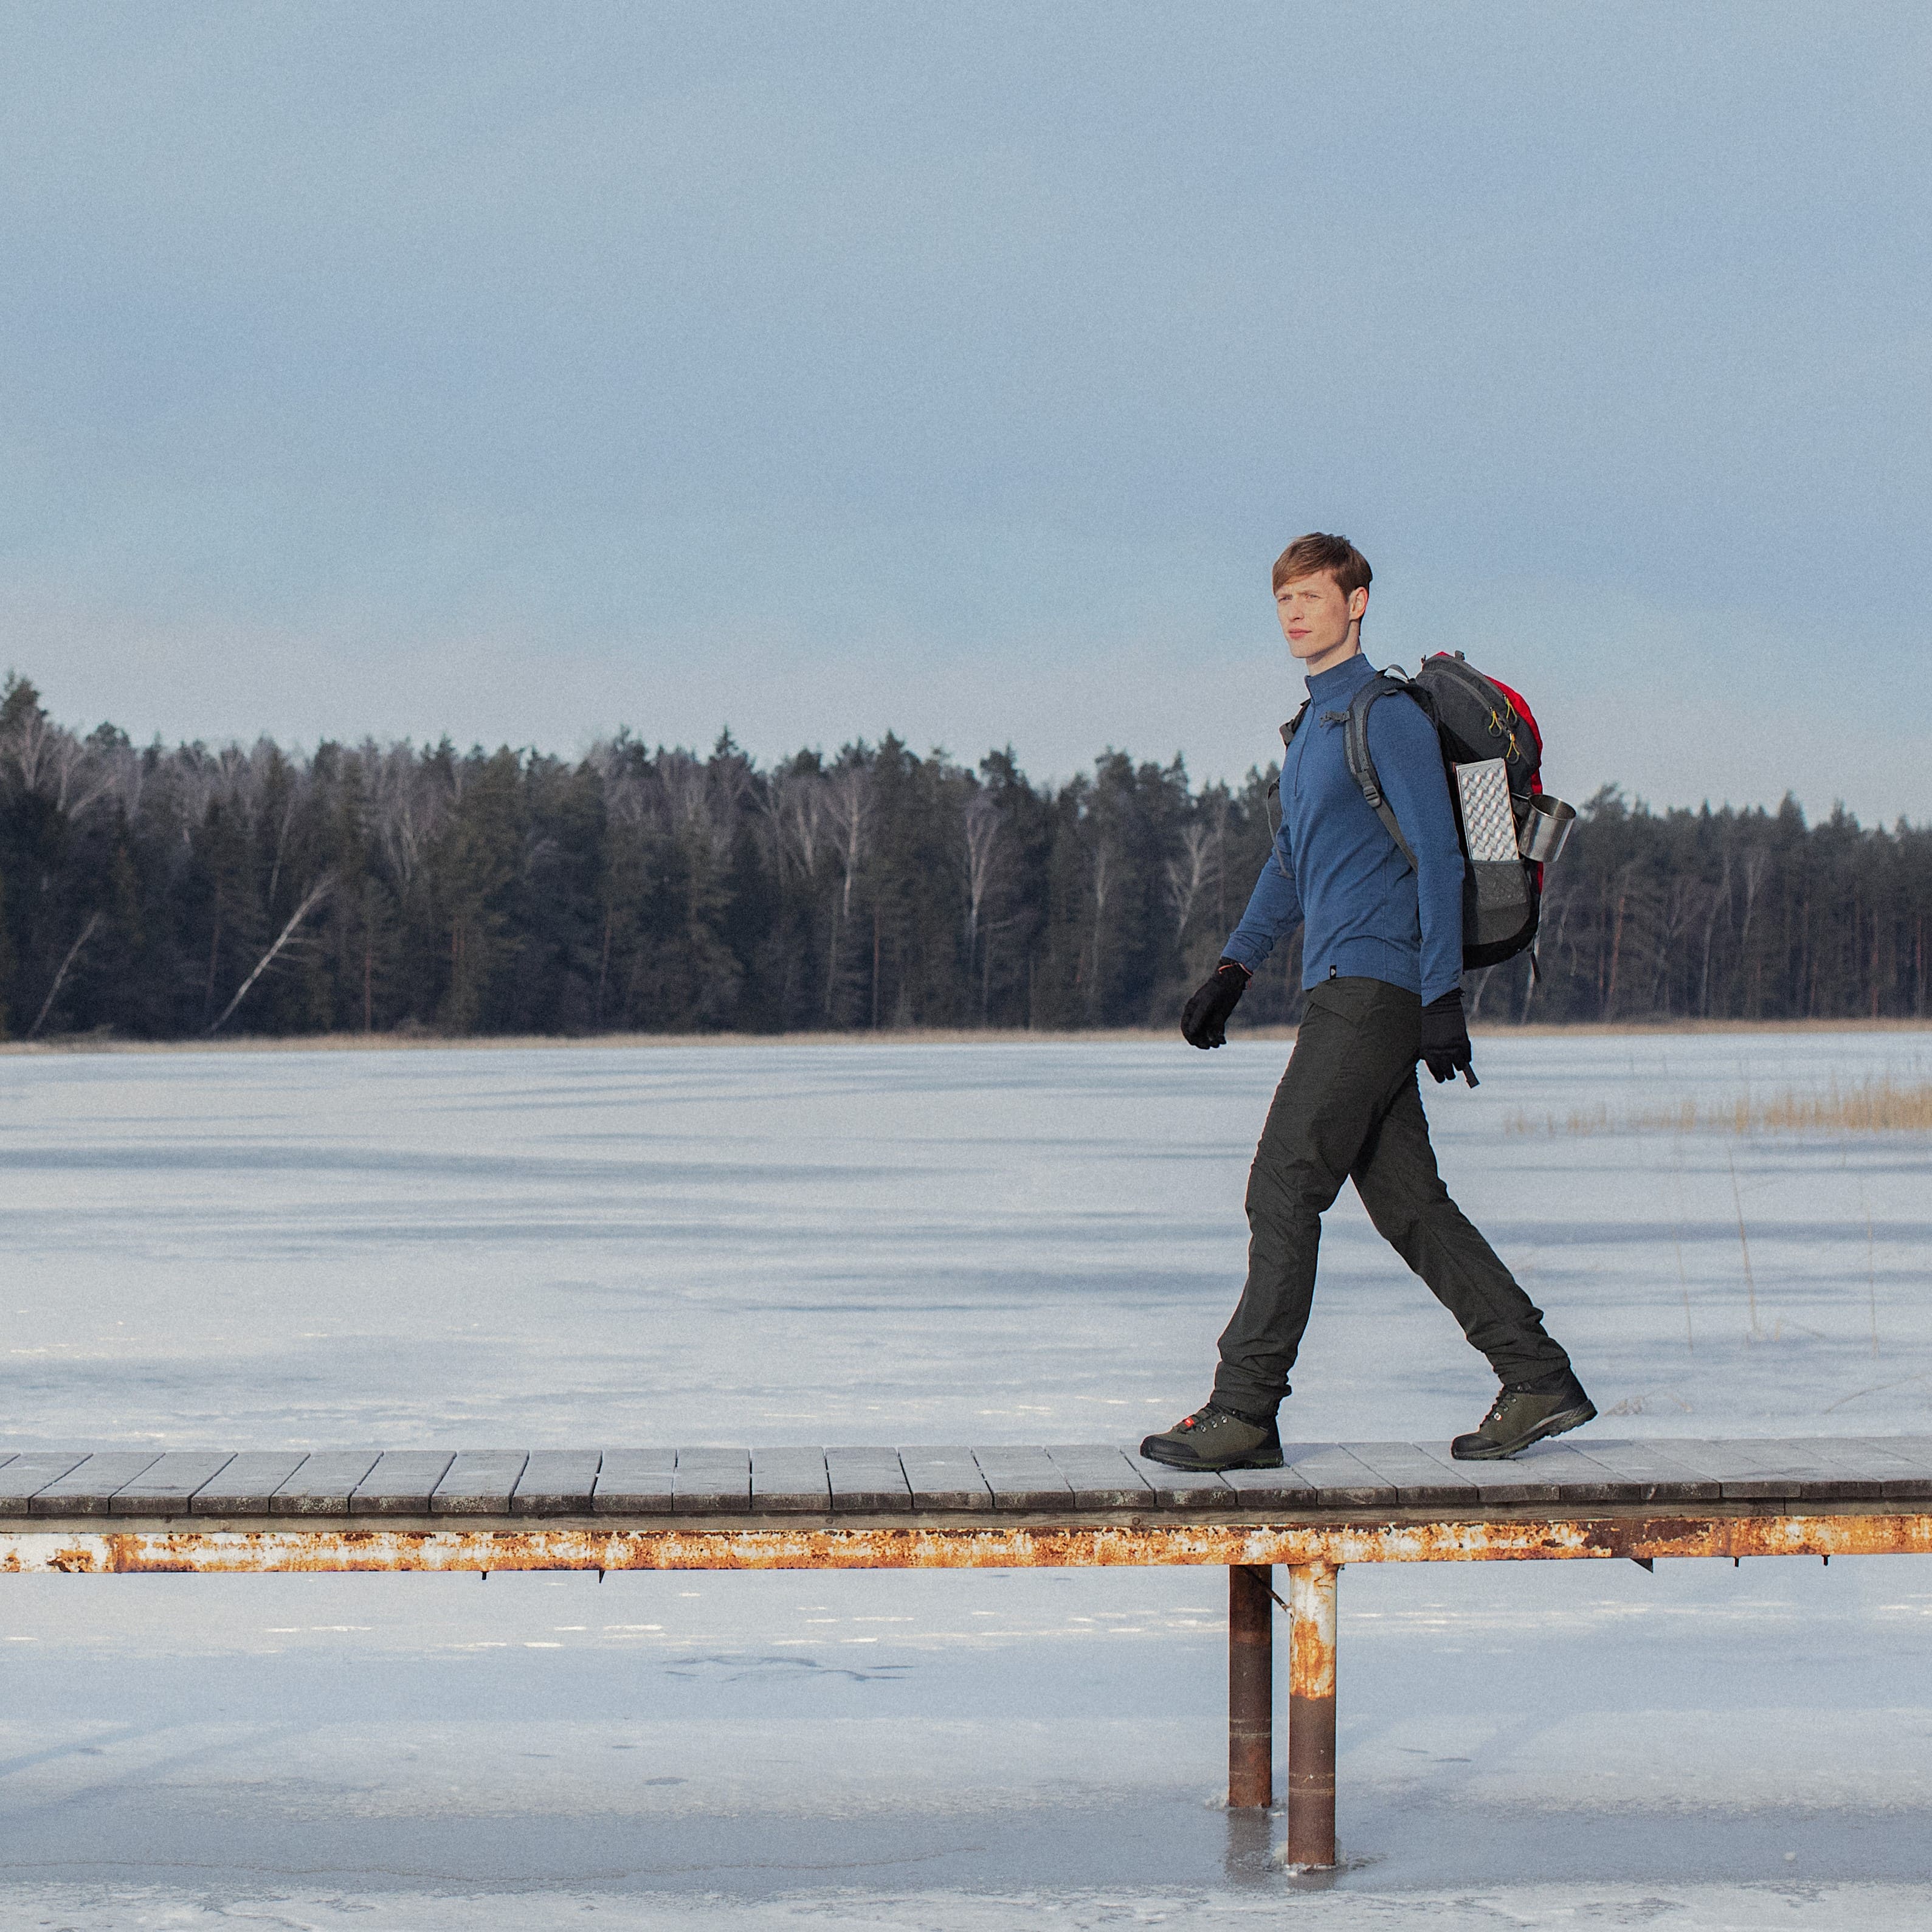 A man goes on a footbridge above a frozen lake